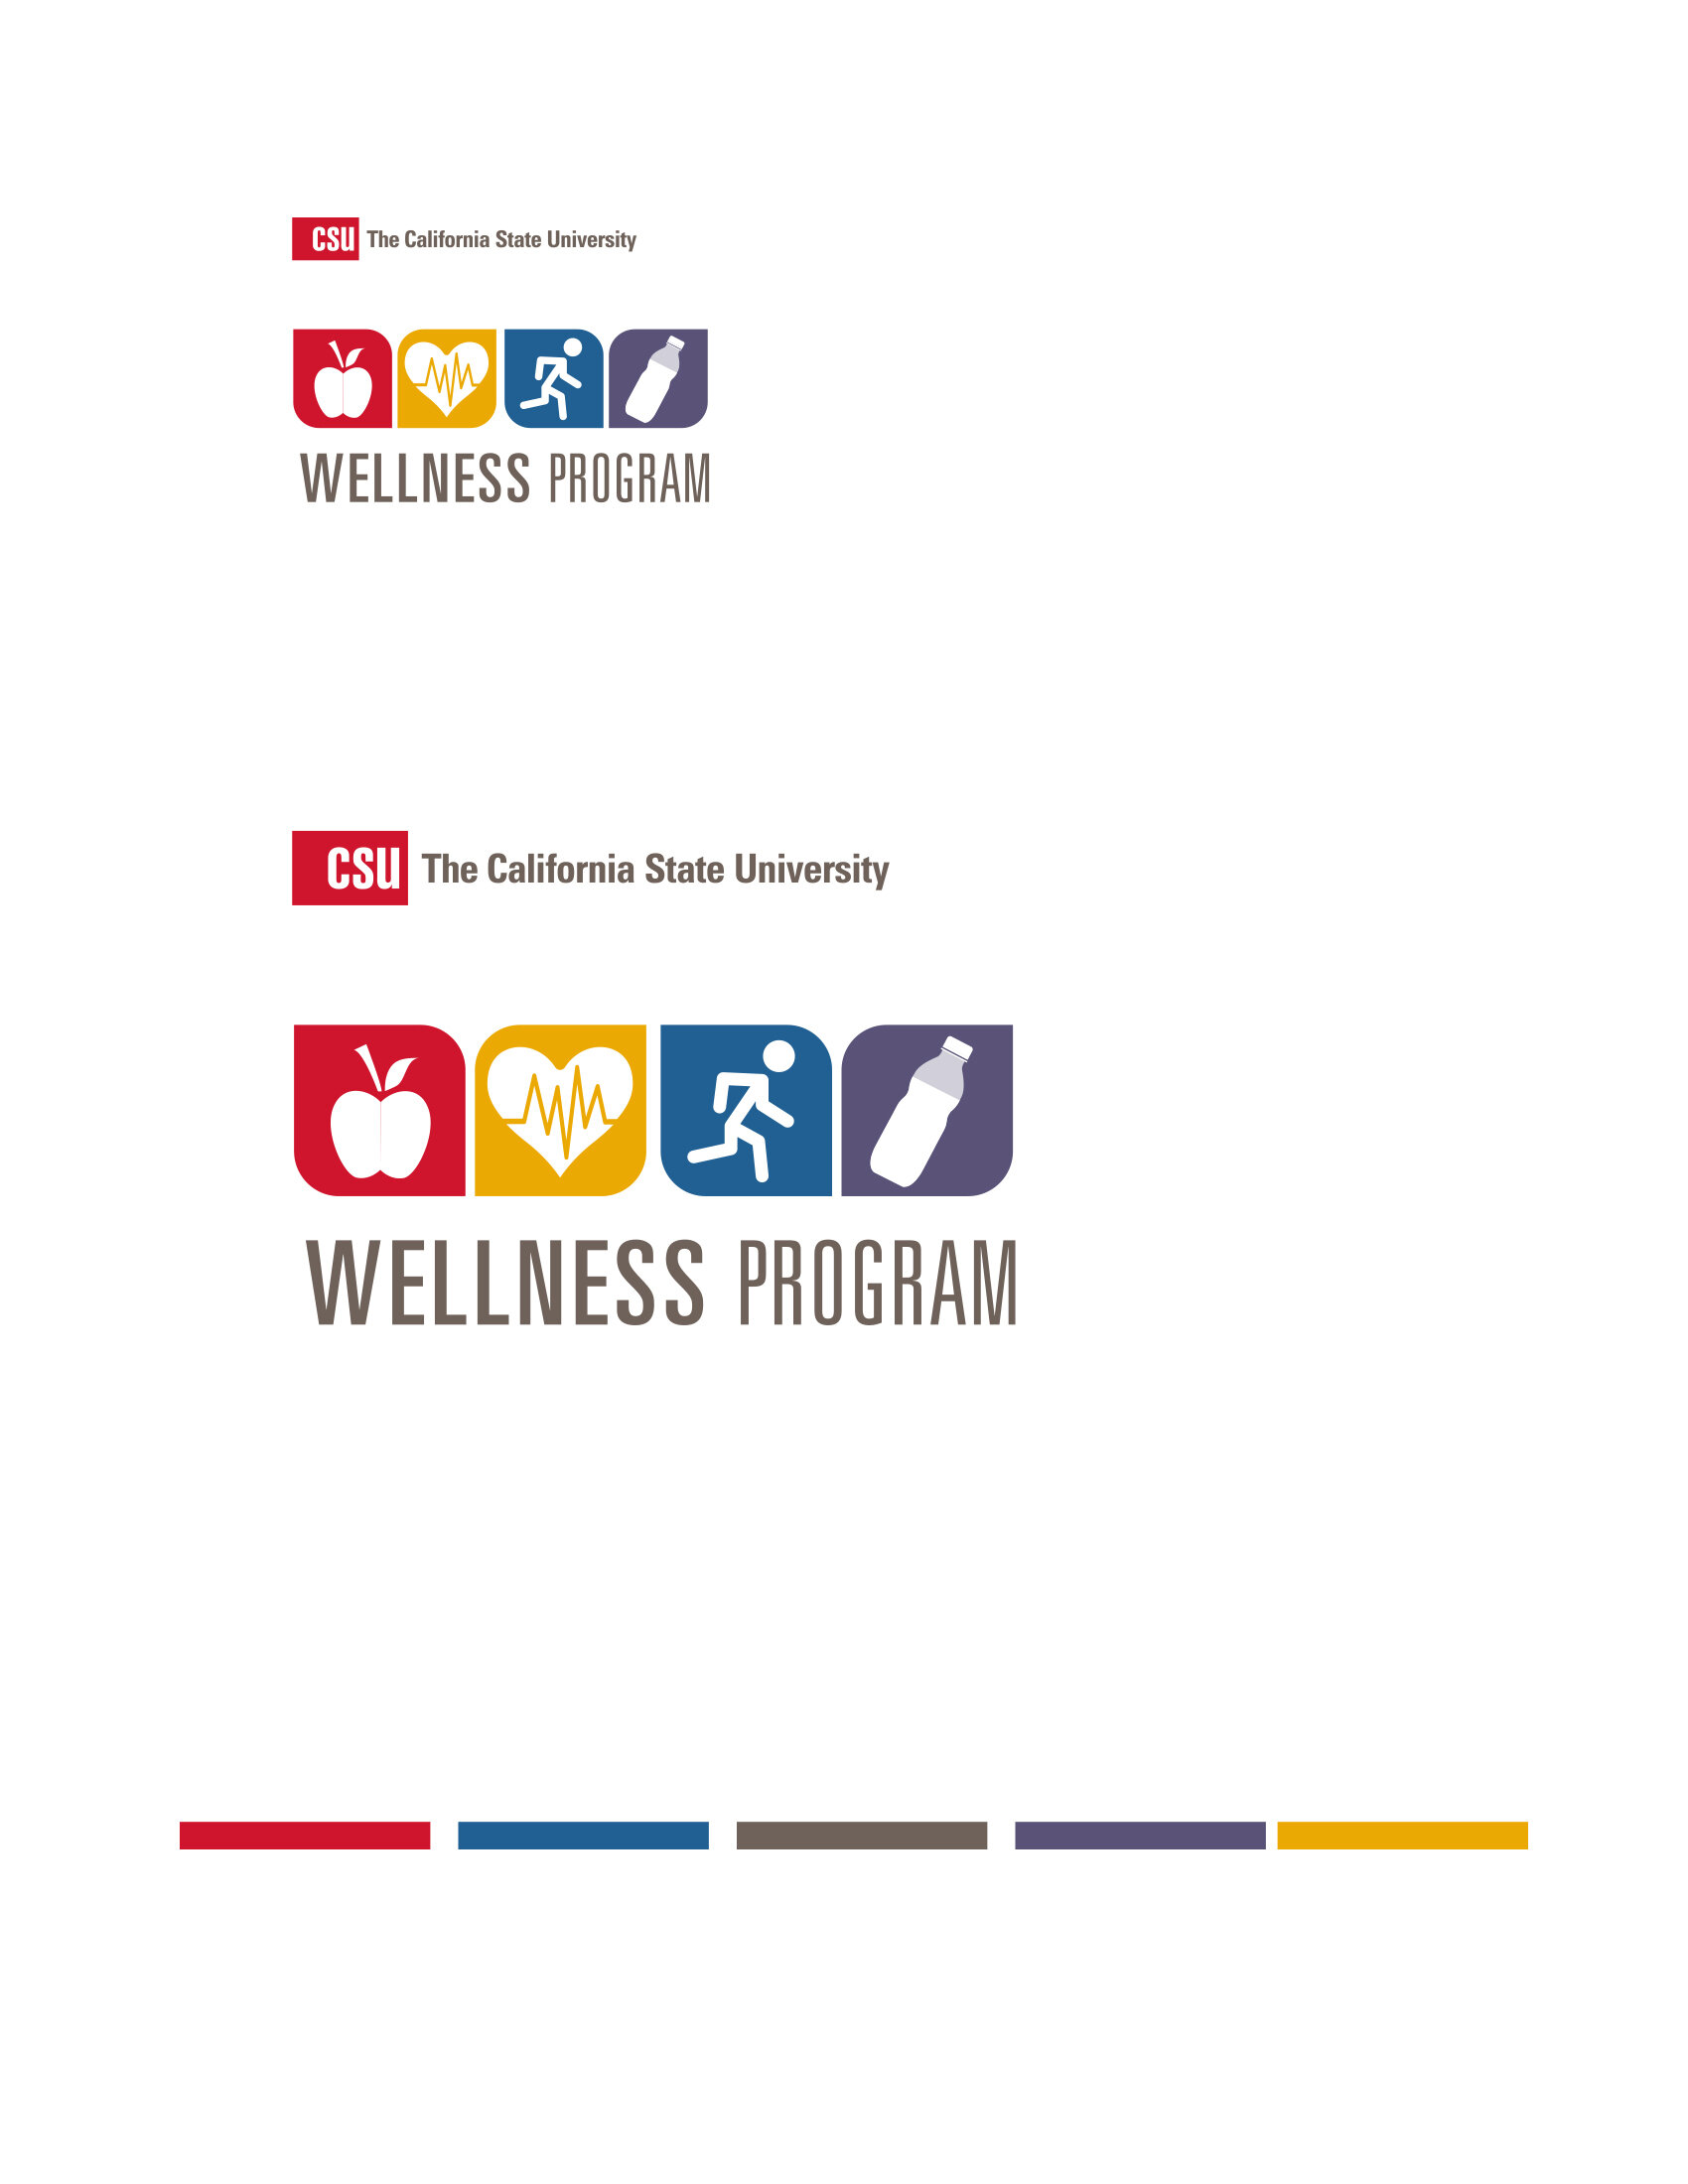 HRS-20229-2016 Wellness Program 2017.jpg